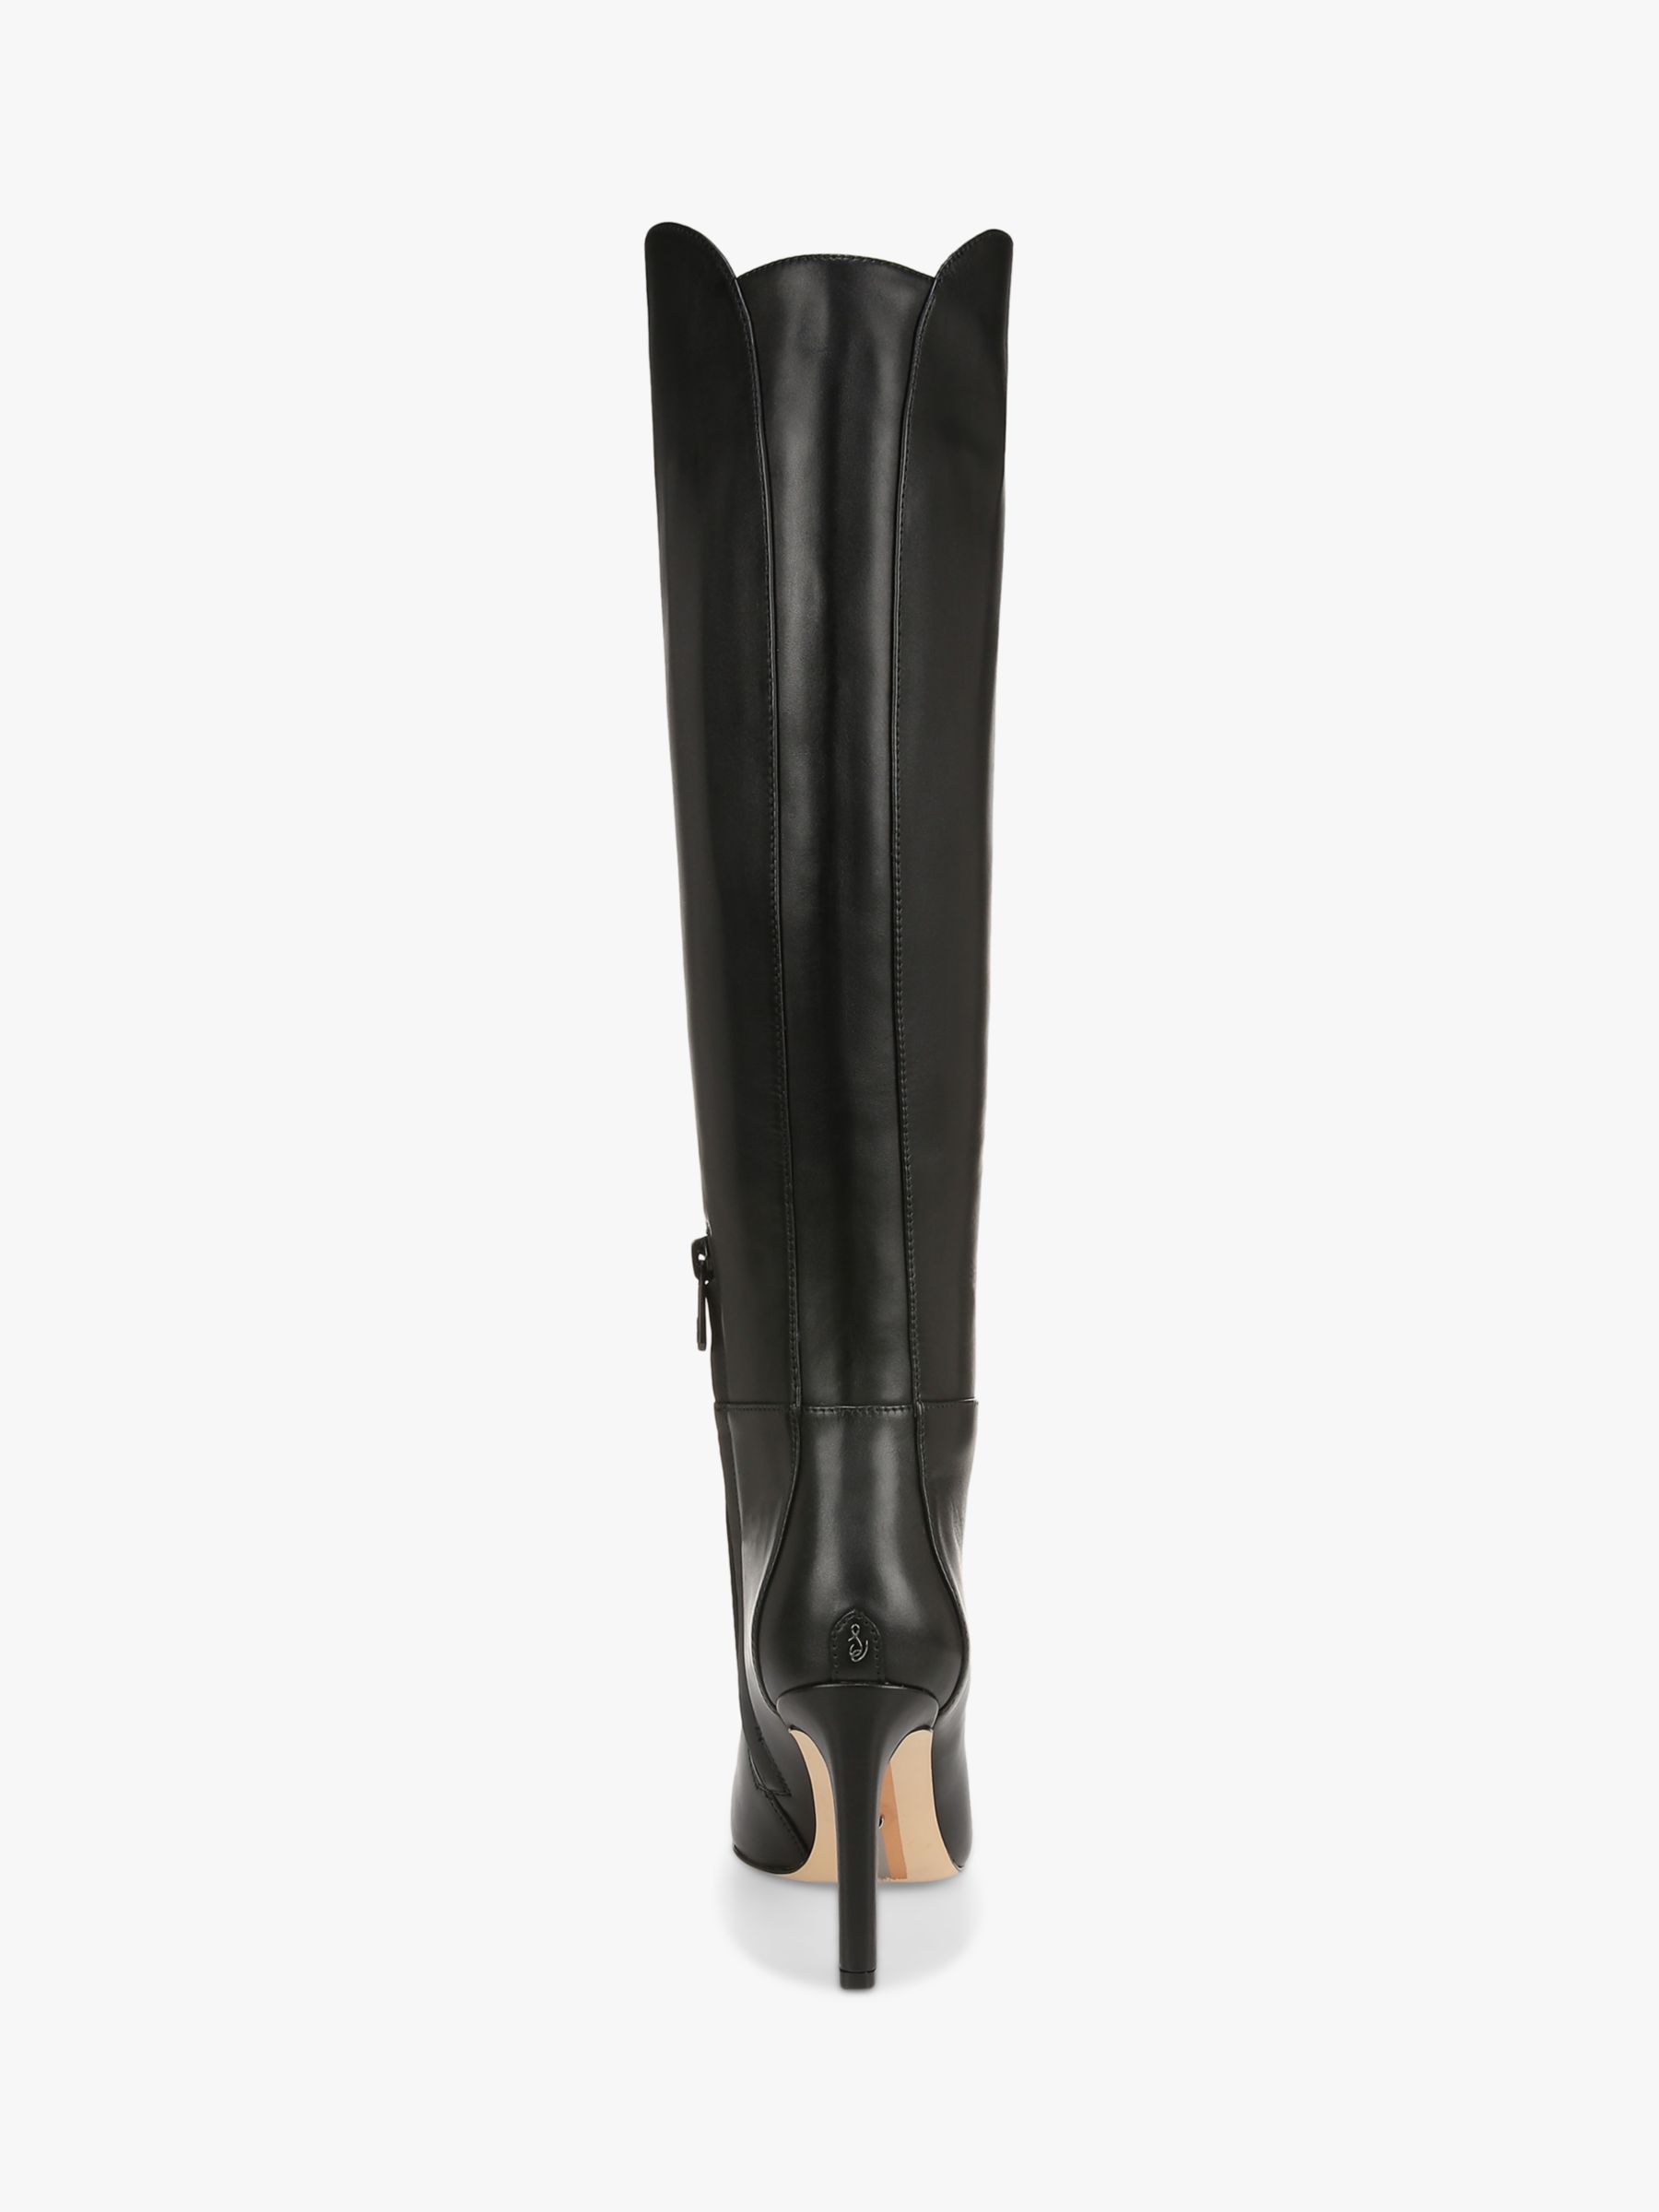 Sam Edelman Shauna Knee High Leather Boots, Black at John Lewis & Partners